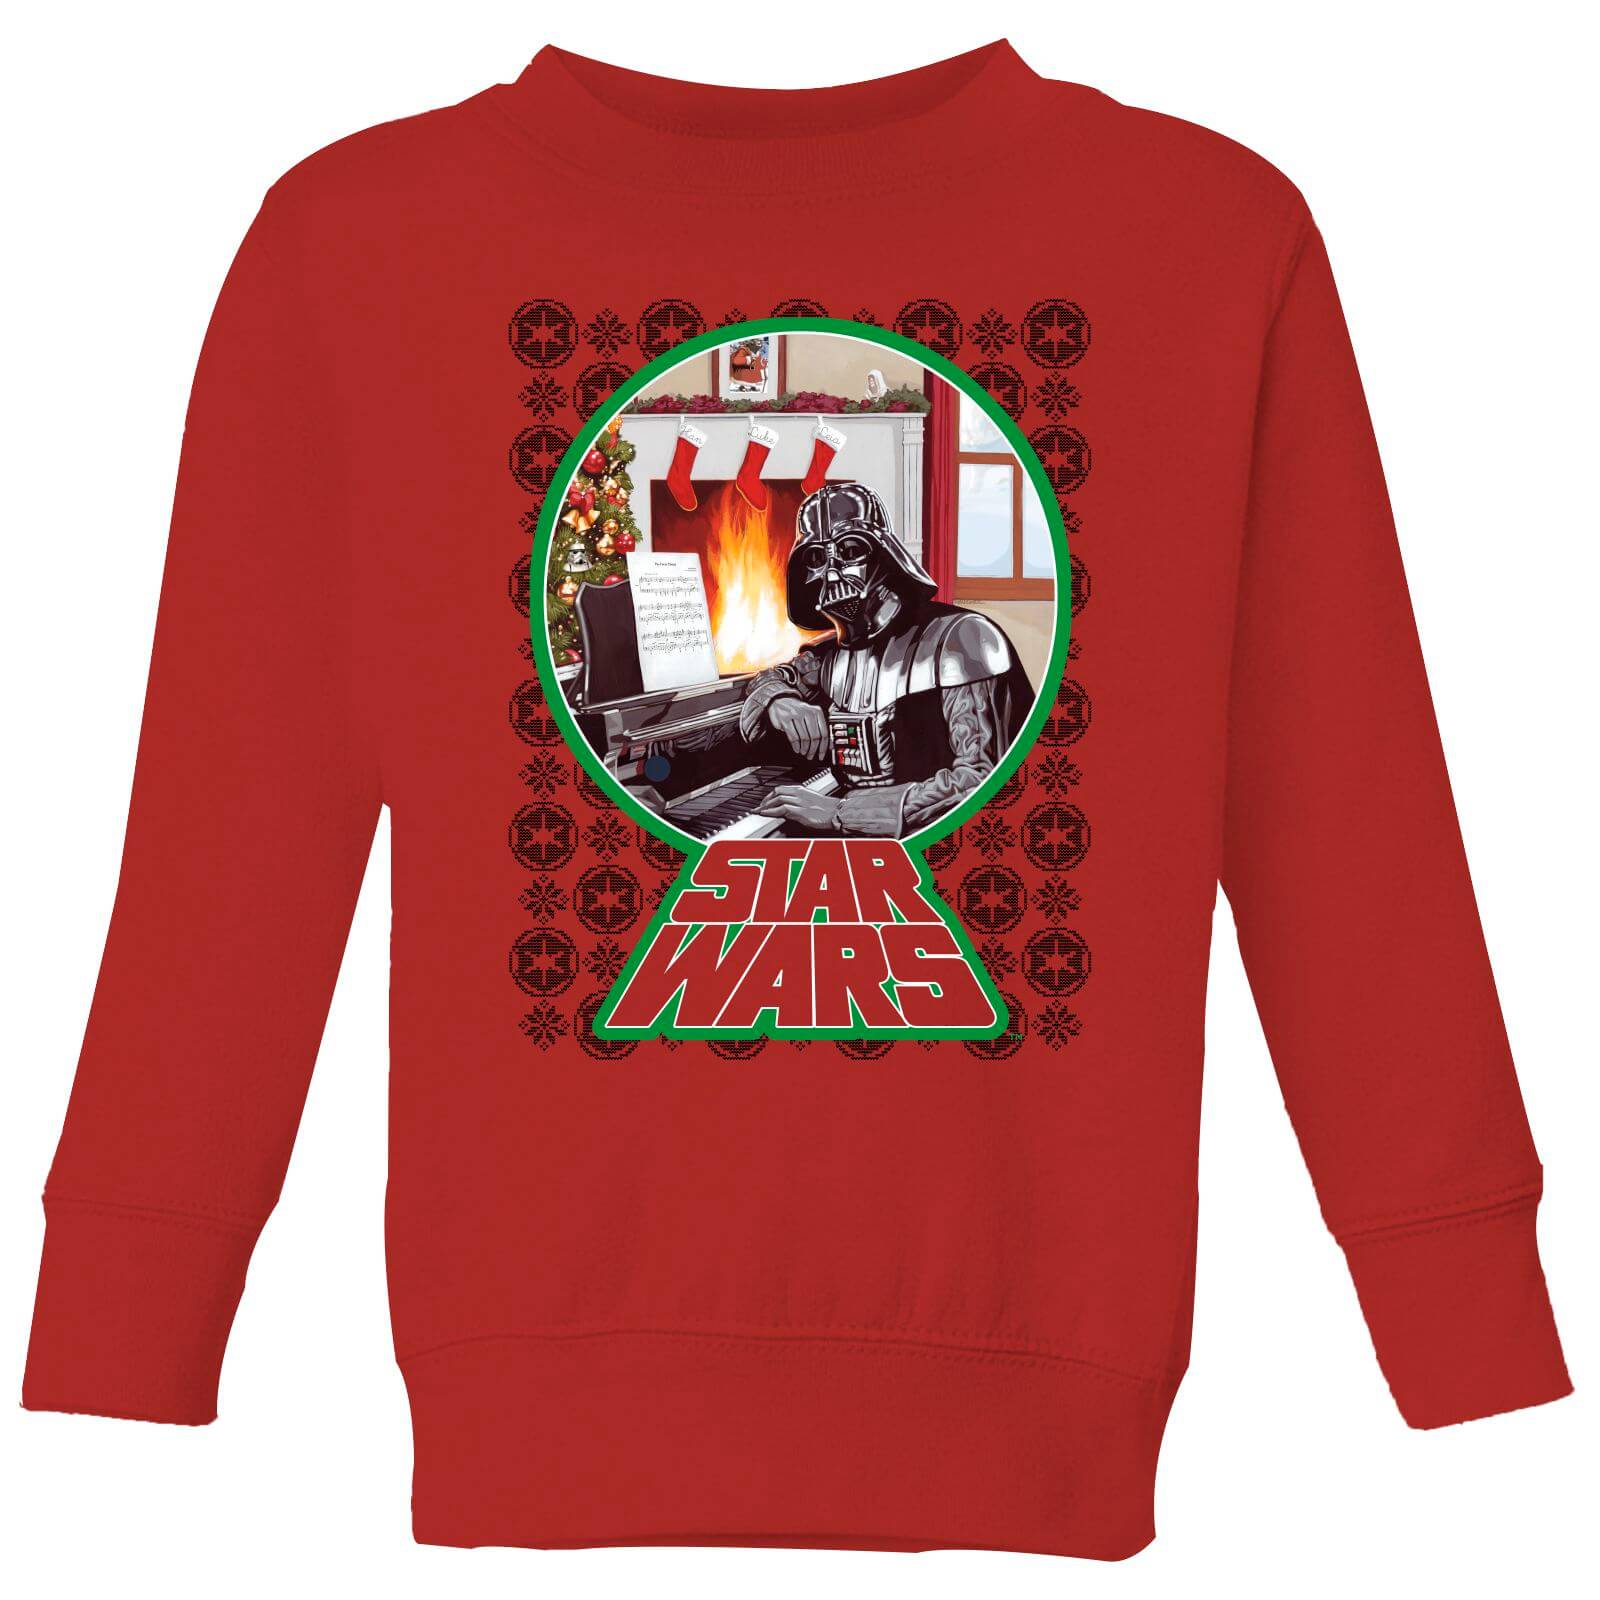 Star Wars A Very Merry Sithmas Kids Christmas Sweatshirt - Red - 11-12 Years